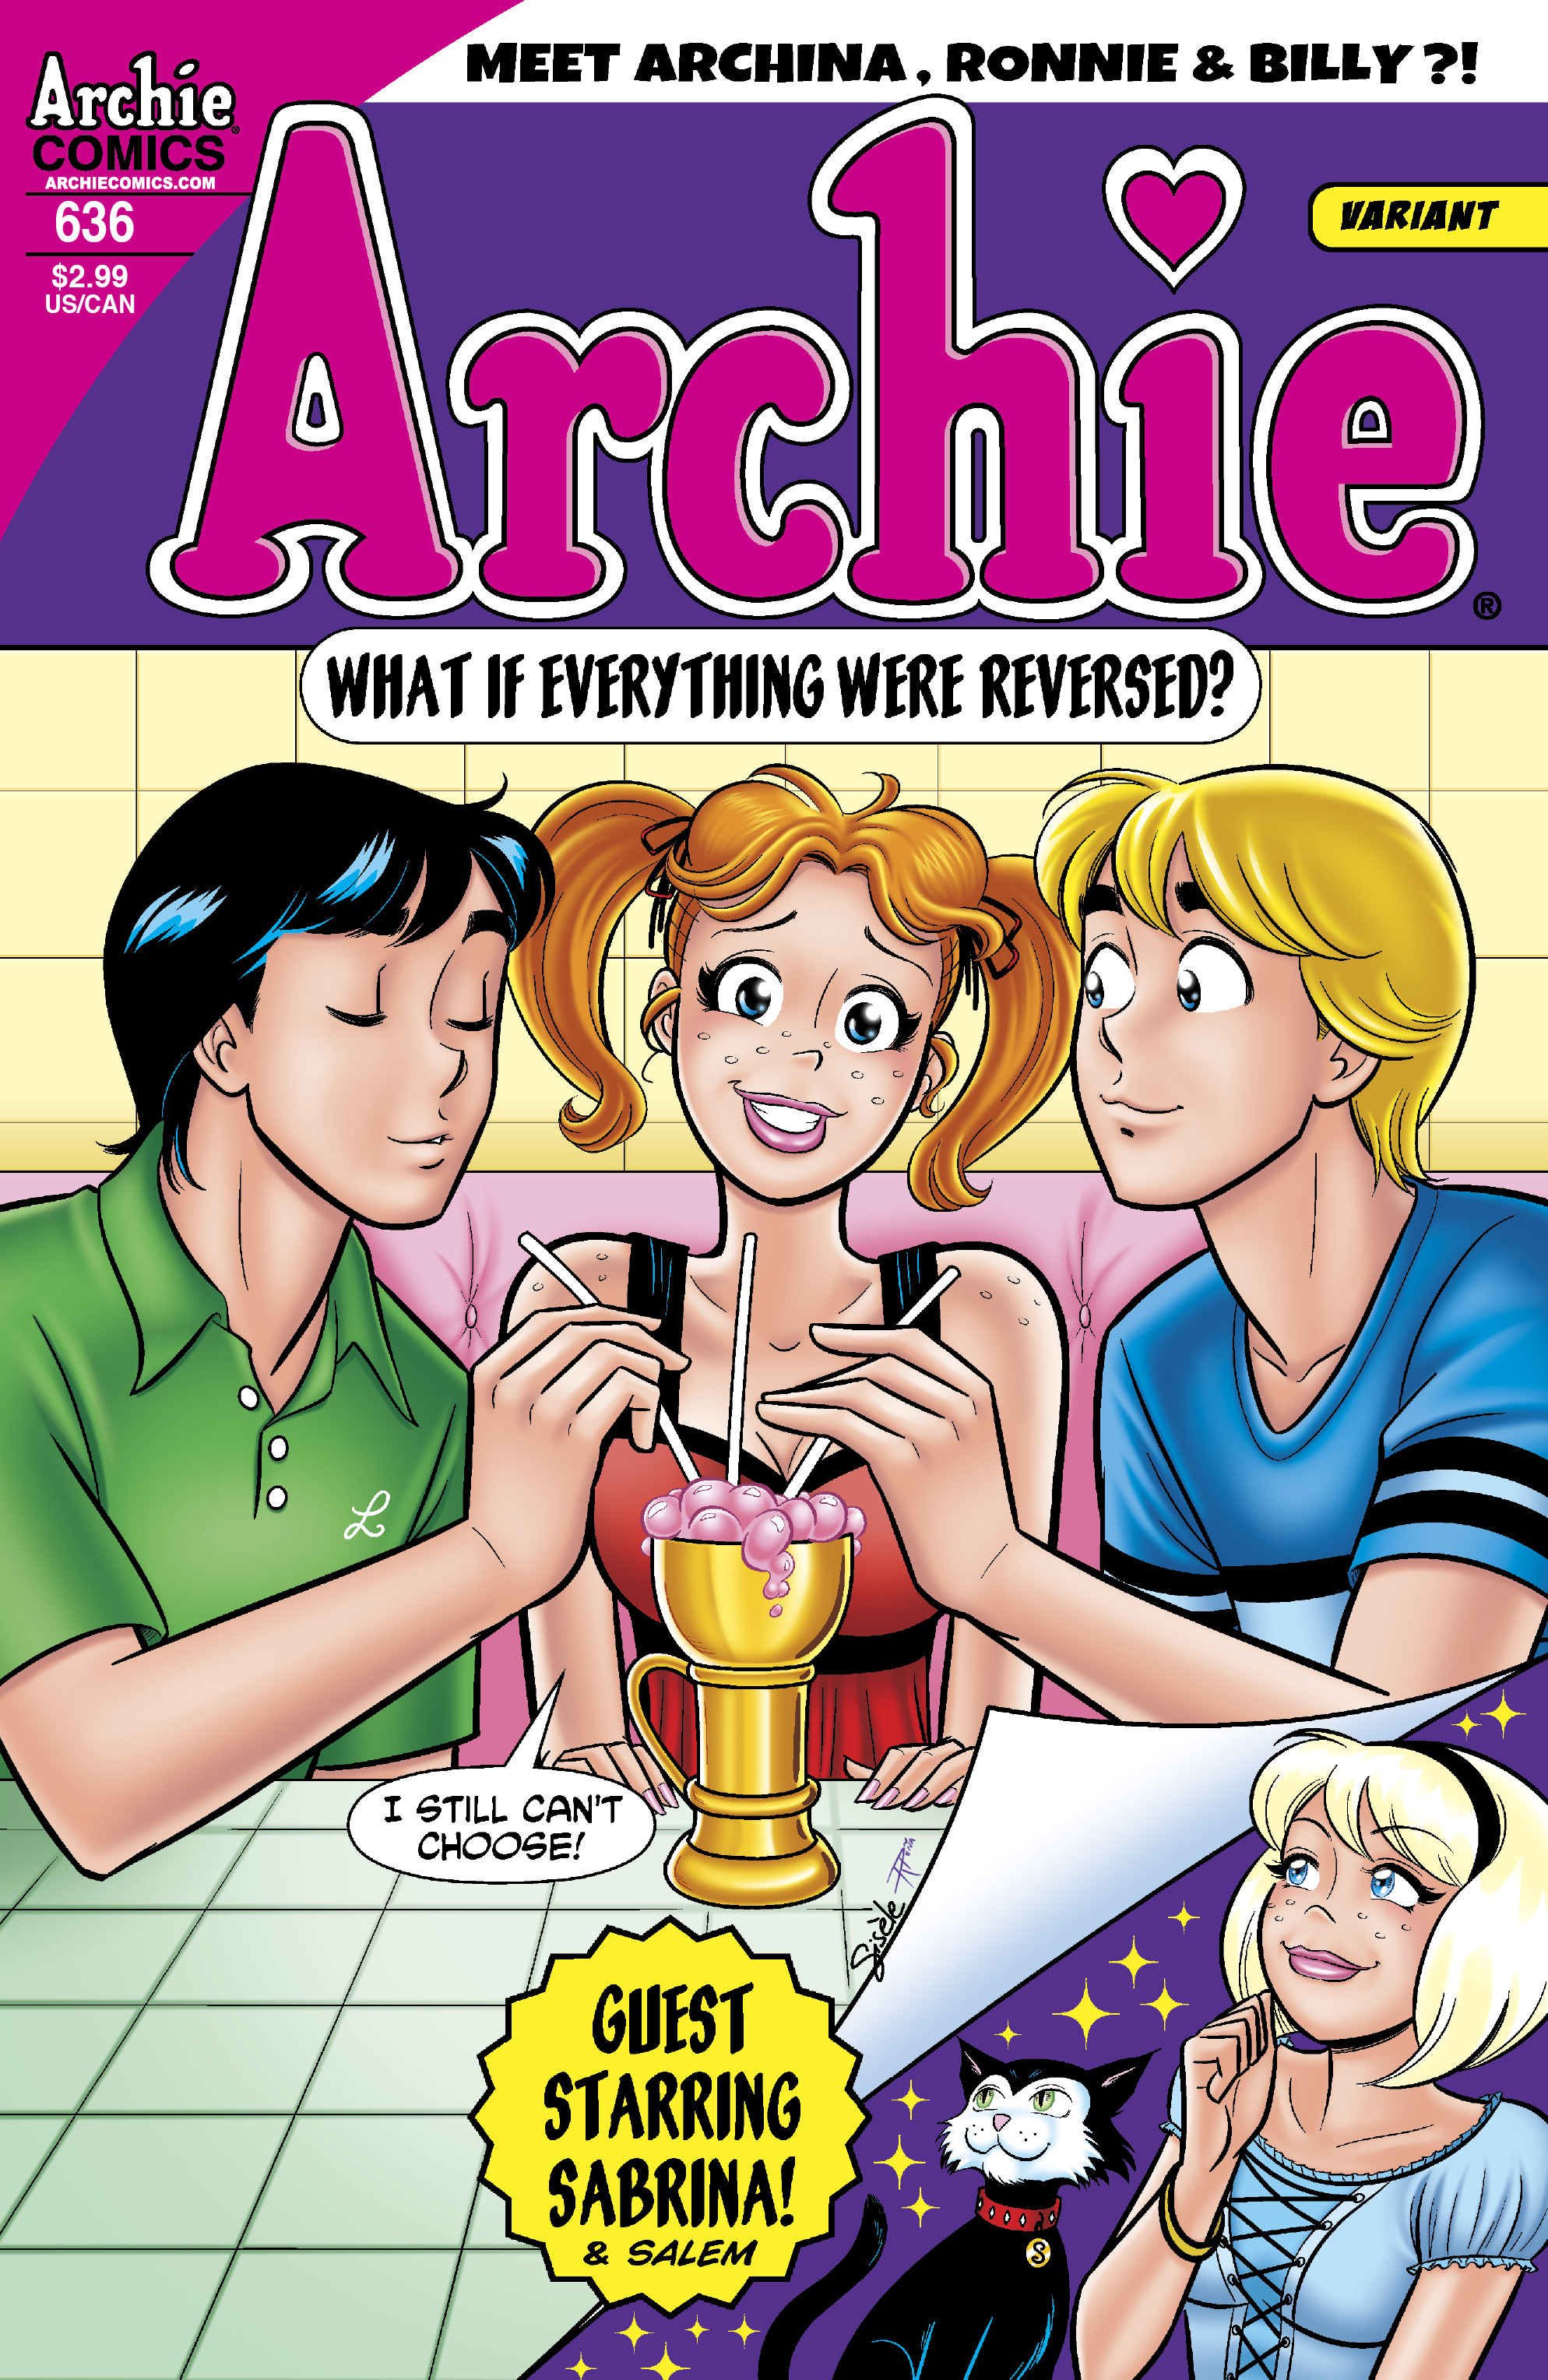 http://comiczine-fa.com/wp-content/uploads/2012/10/Archie636.jpg